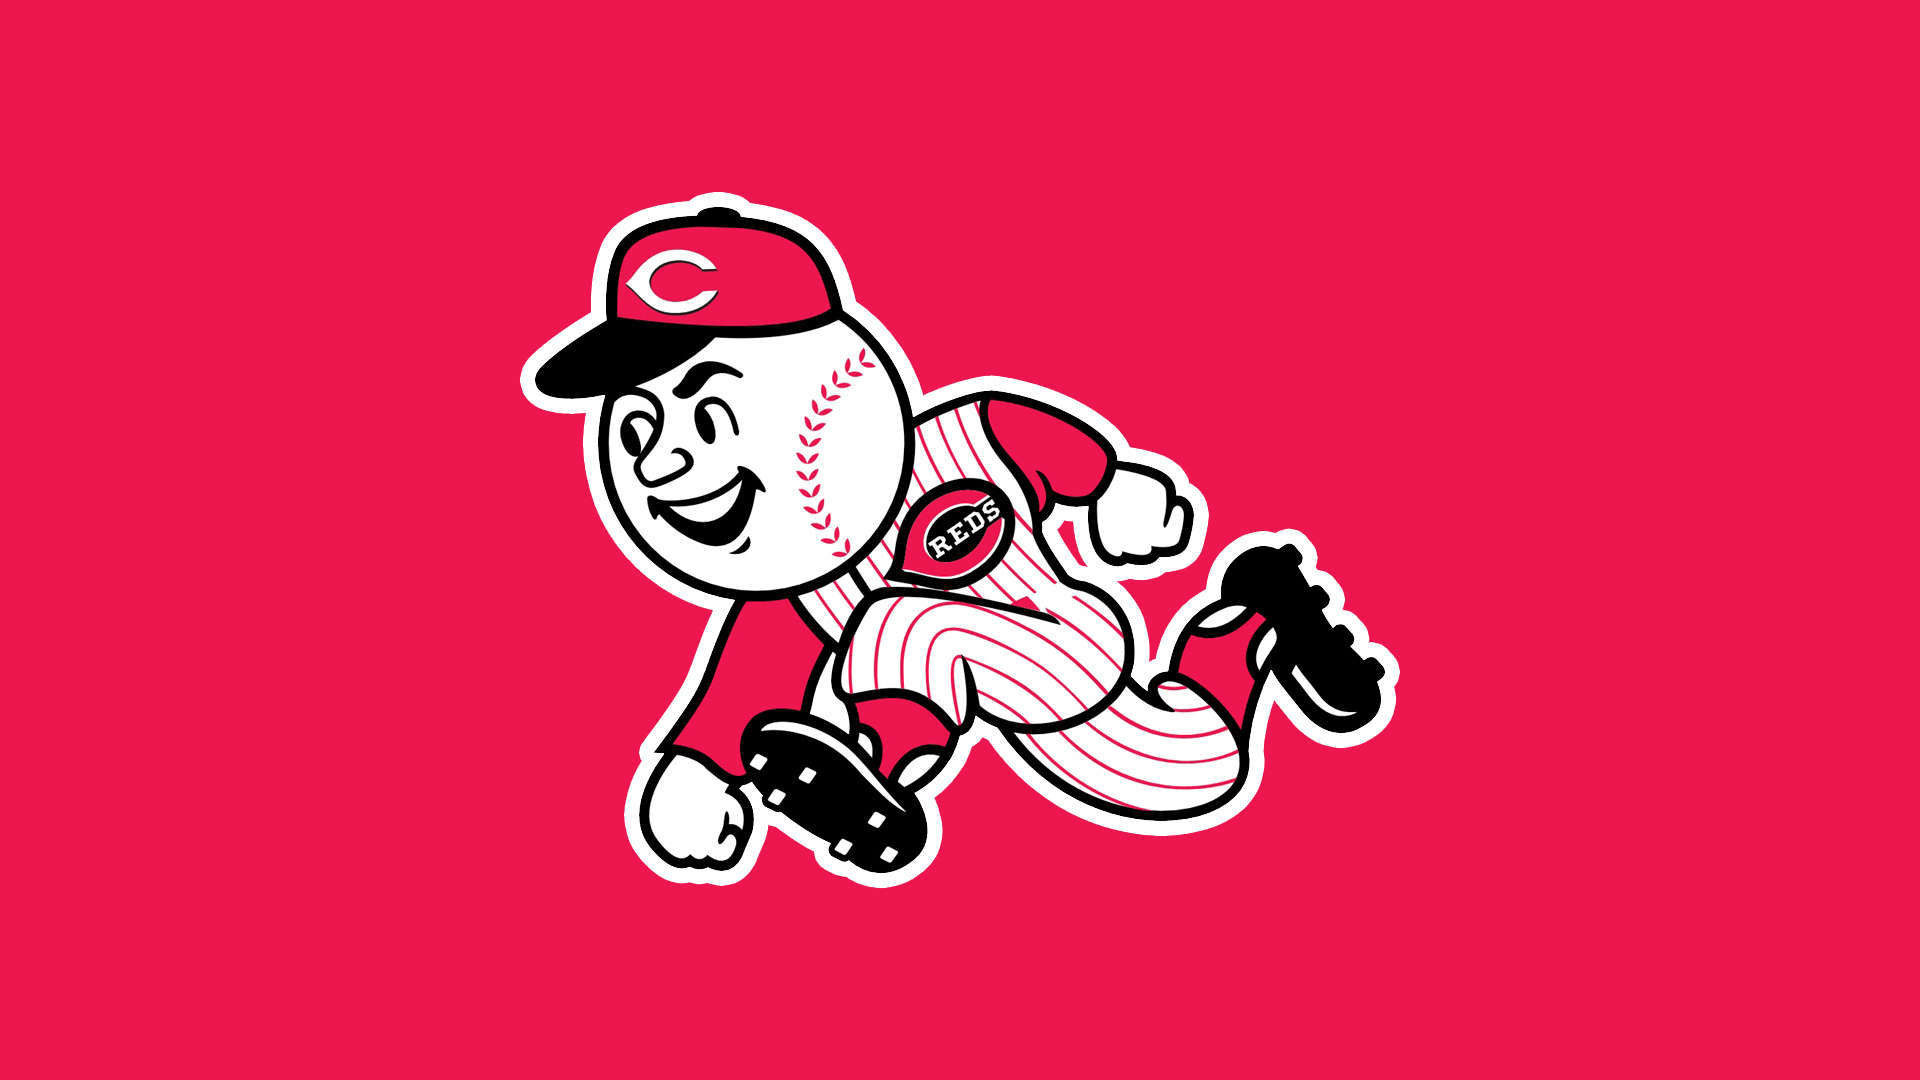 1920x1080 Download now: Cincinnati Reds Logo HD Wallpaper. Read description info .